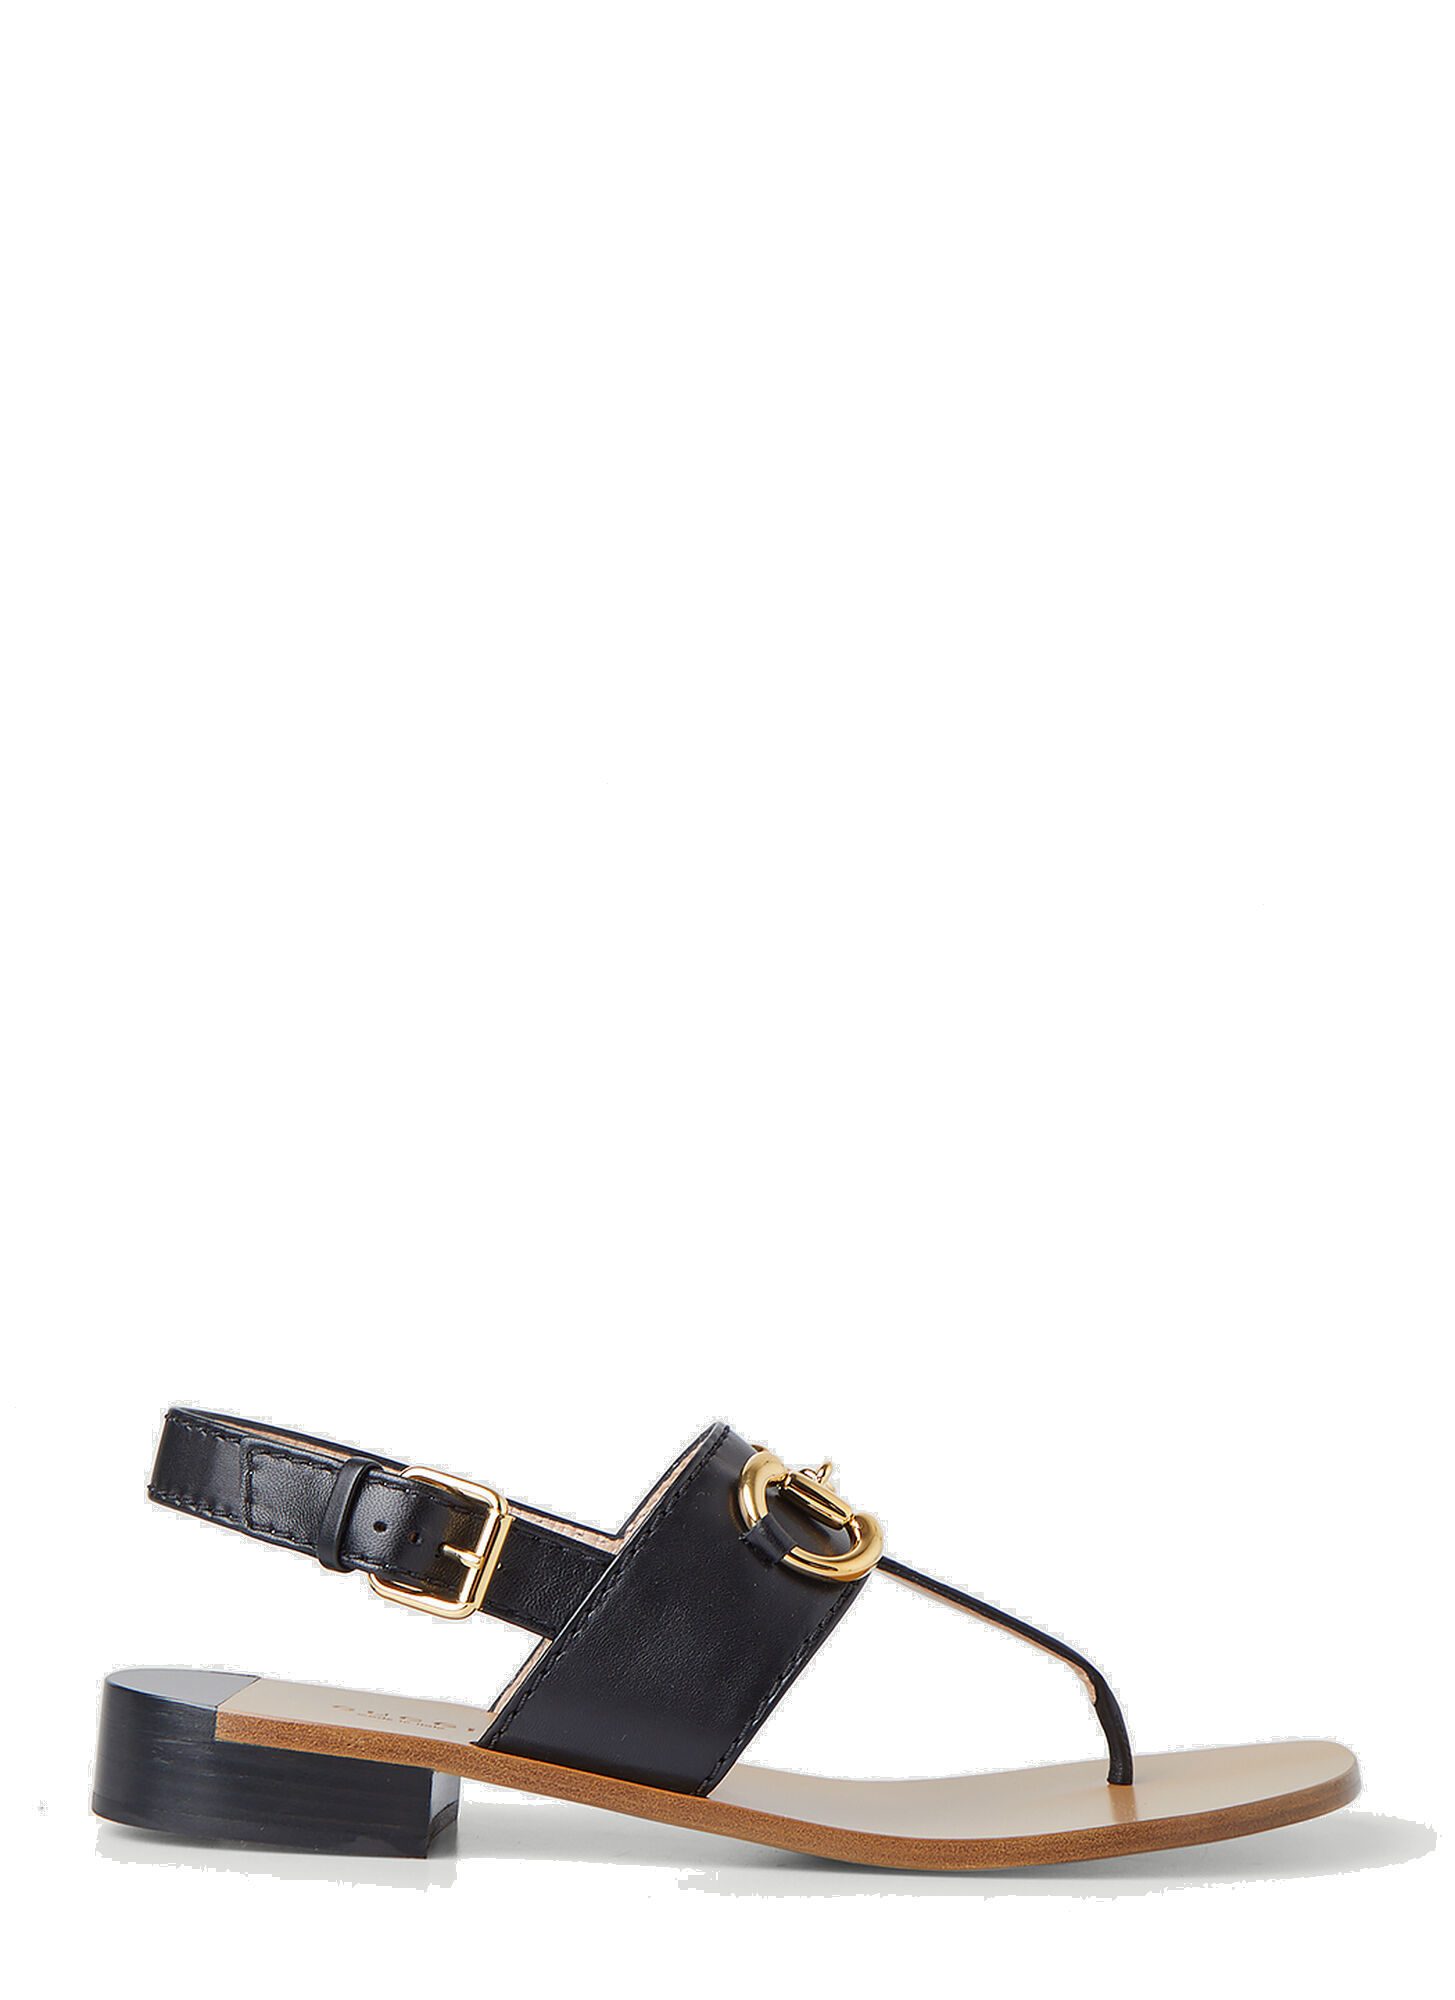 Horsebit Thong Sandals in Black Gucci